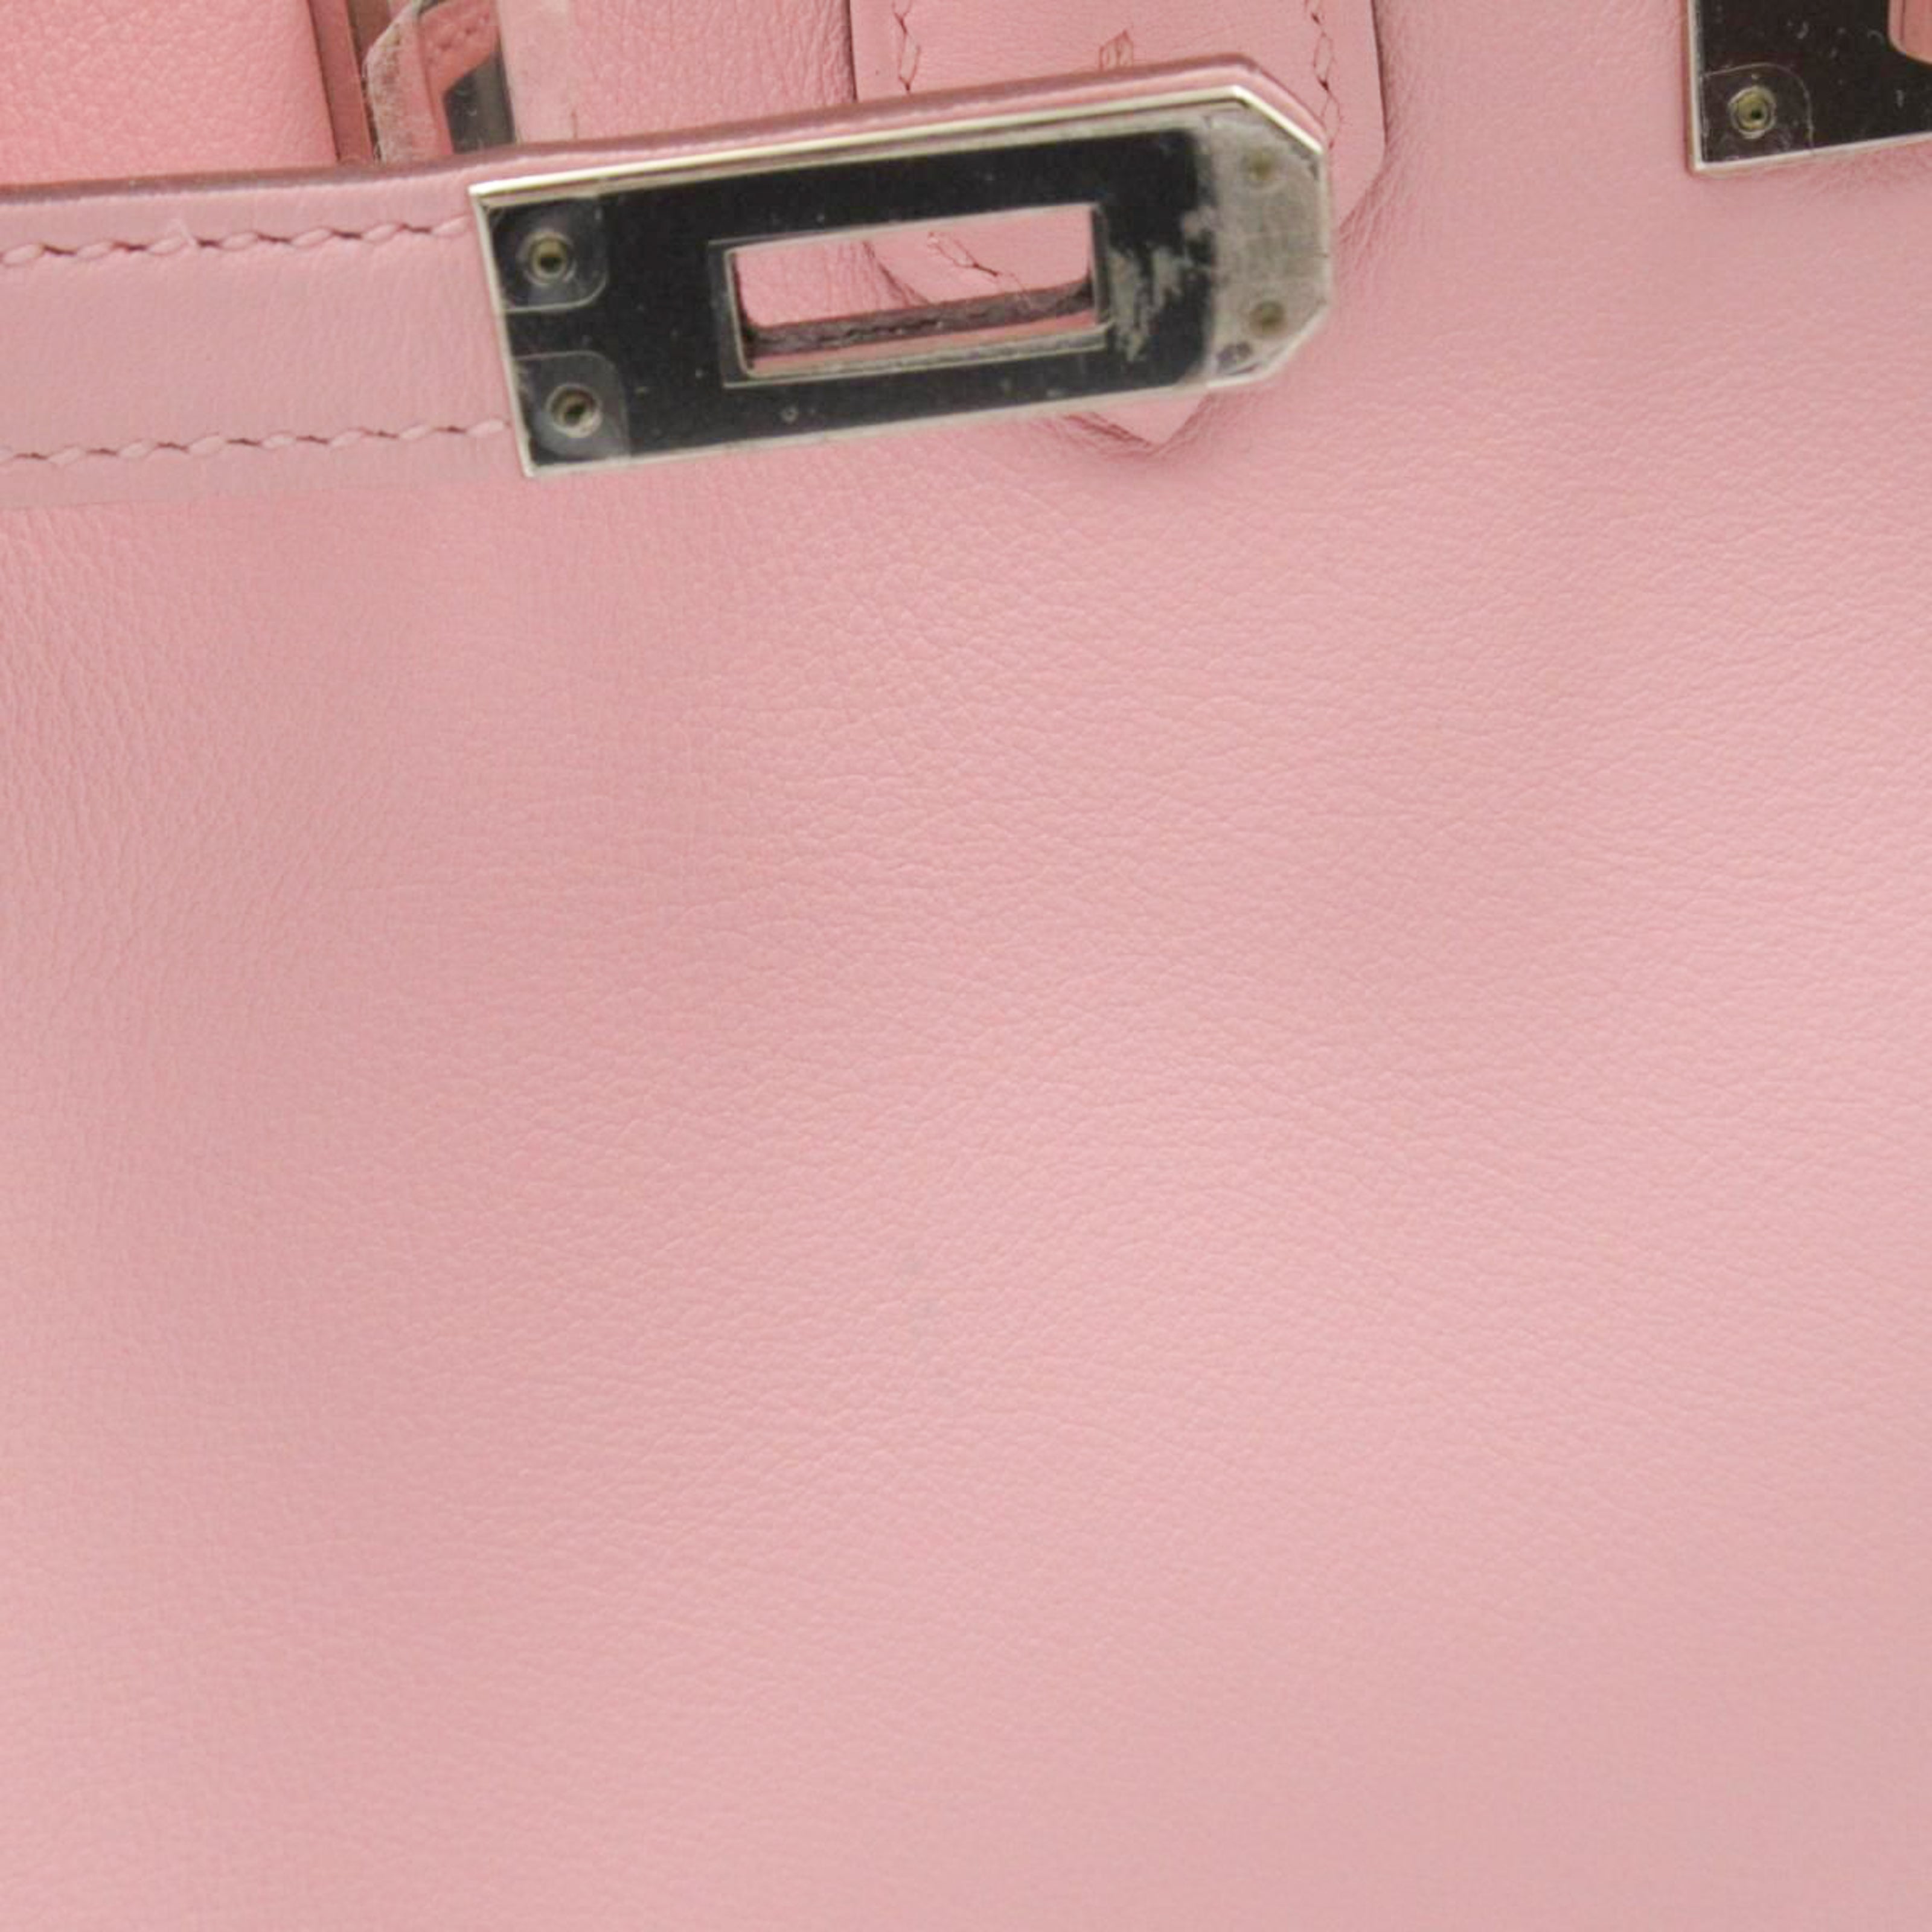 Hermès Birkin 25 Swift Rose Sakura – Vault 55